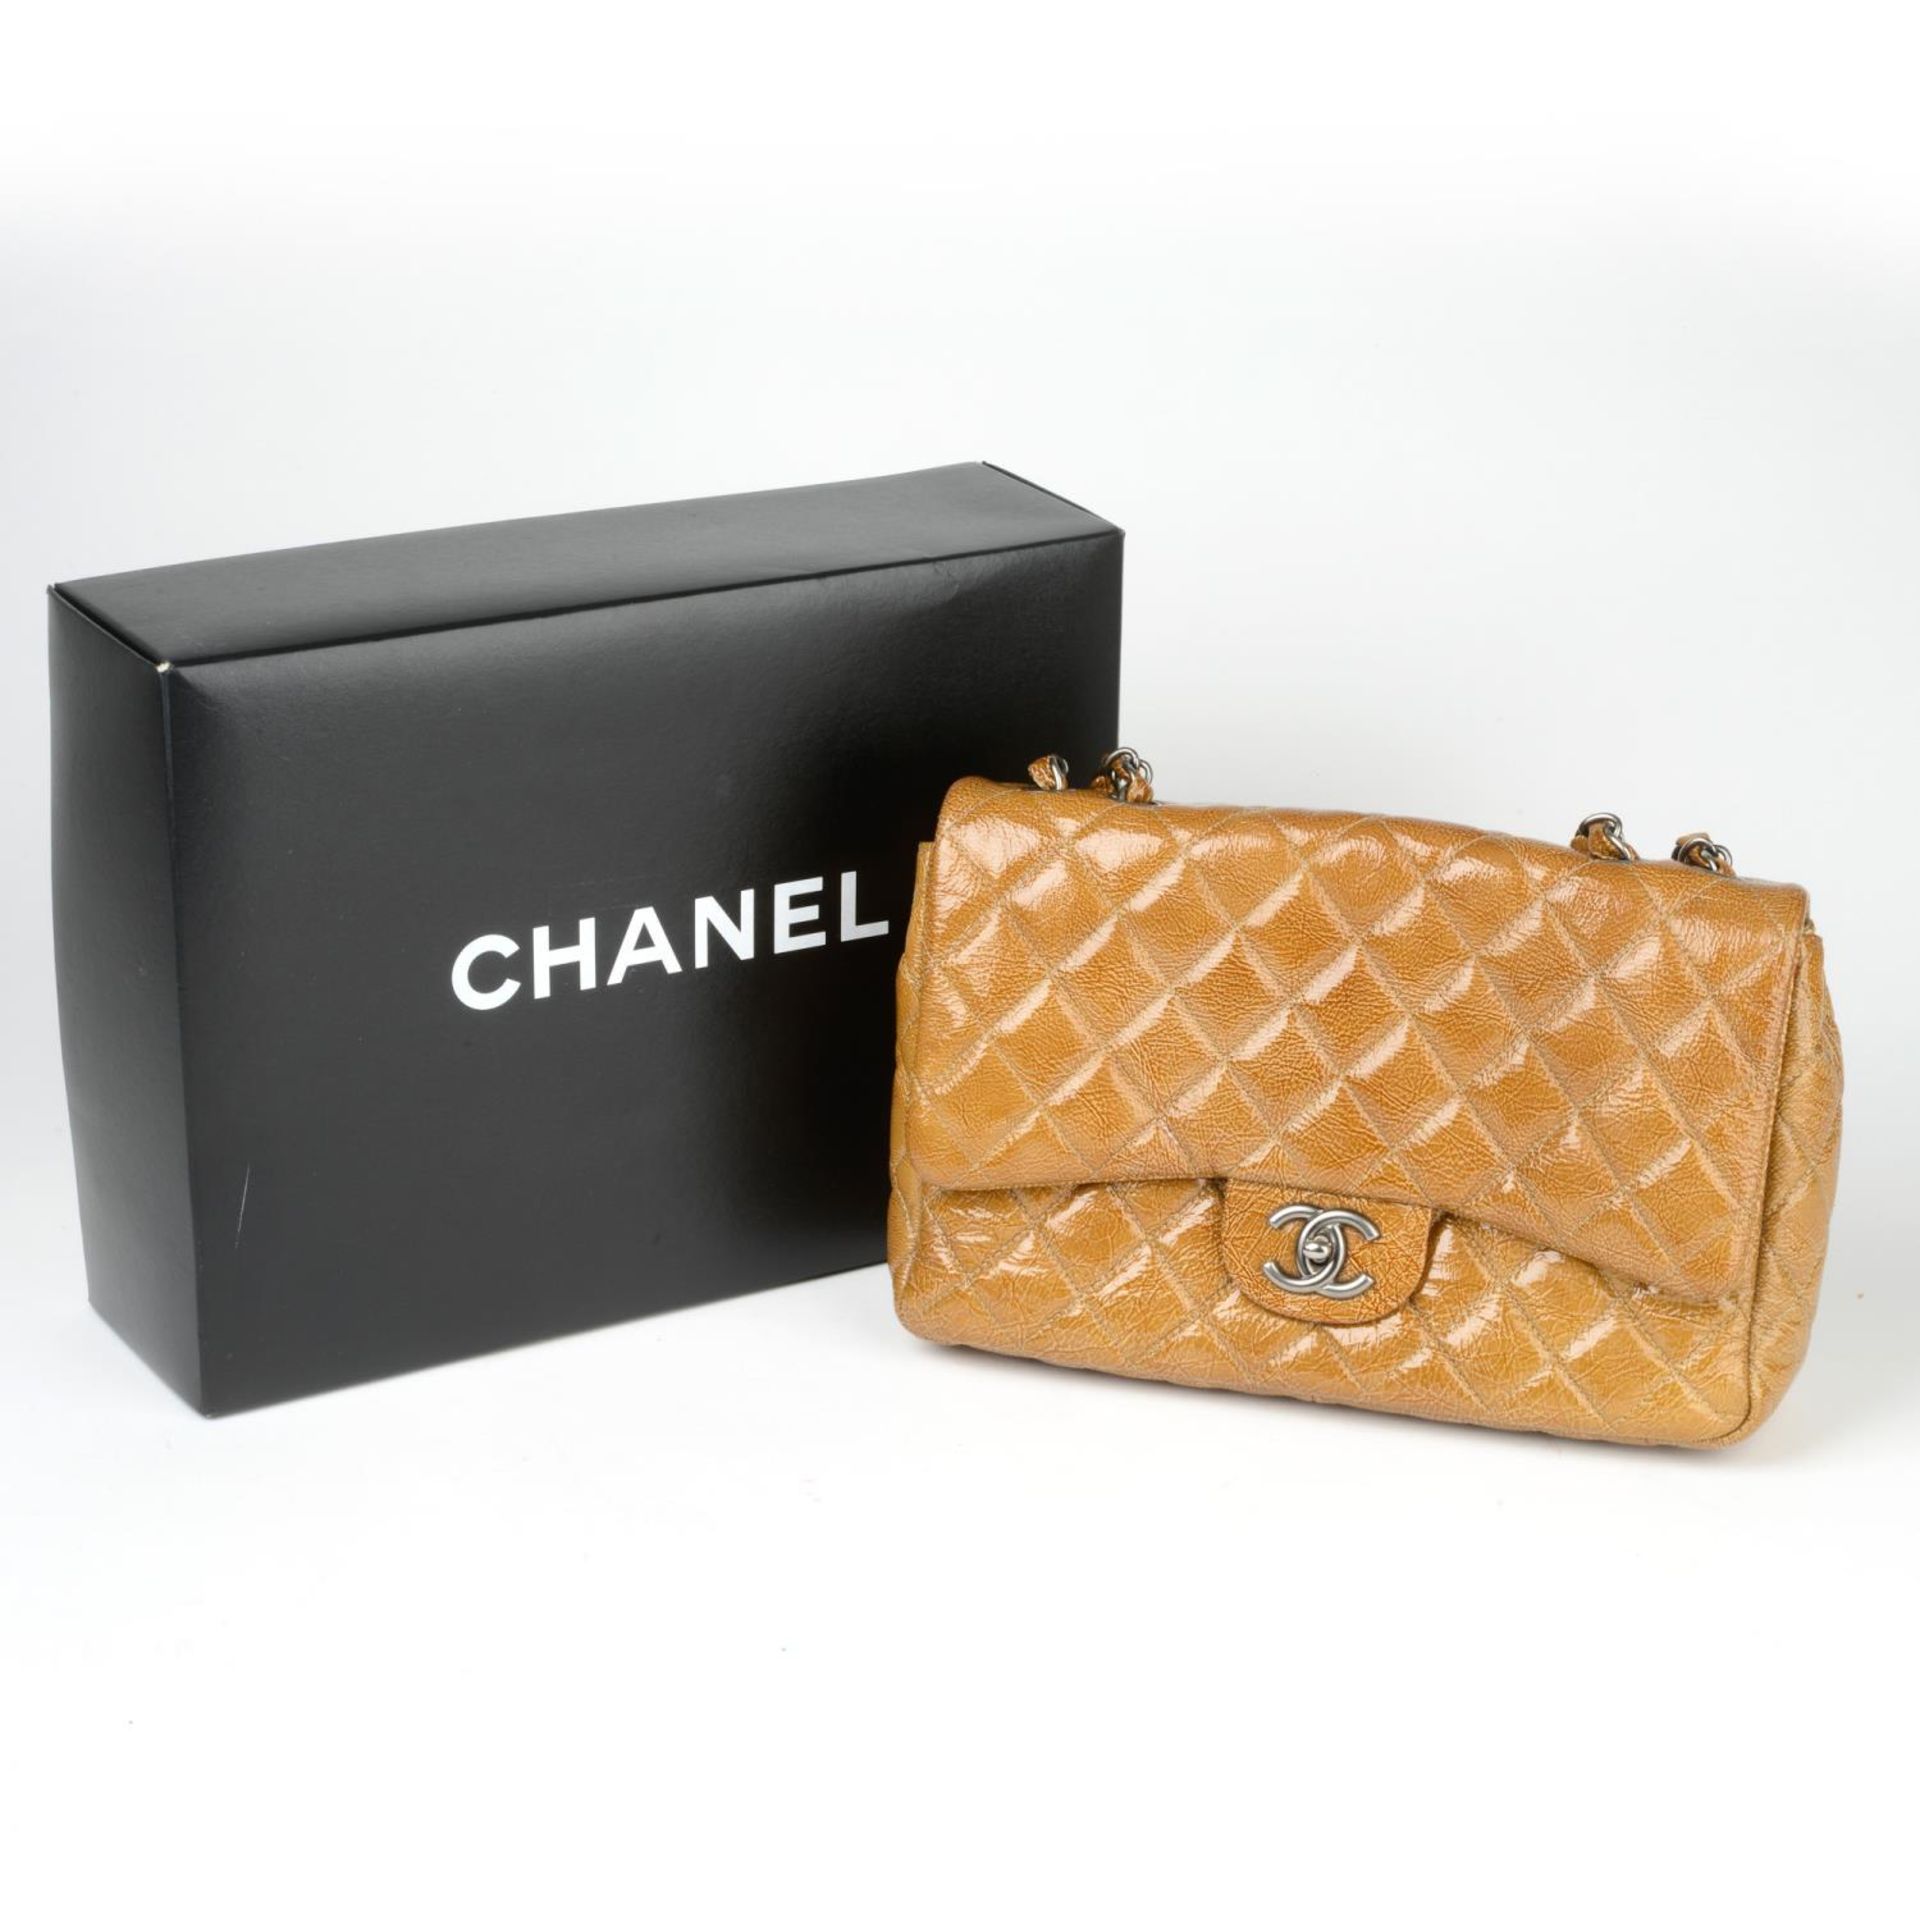 CHANEL - a crinkled patent leather Single Flap handbag. - Bild 4 aus 4